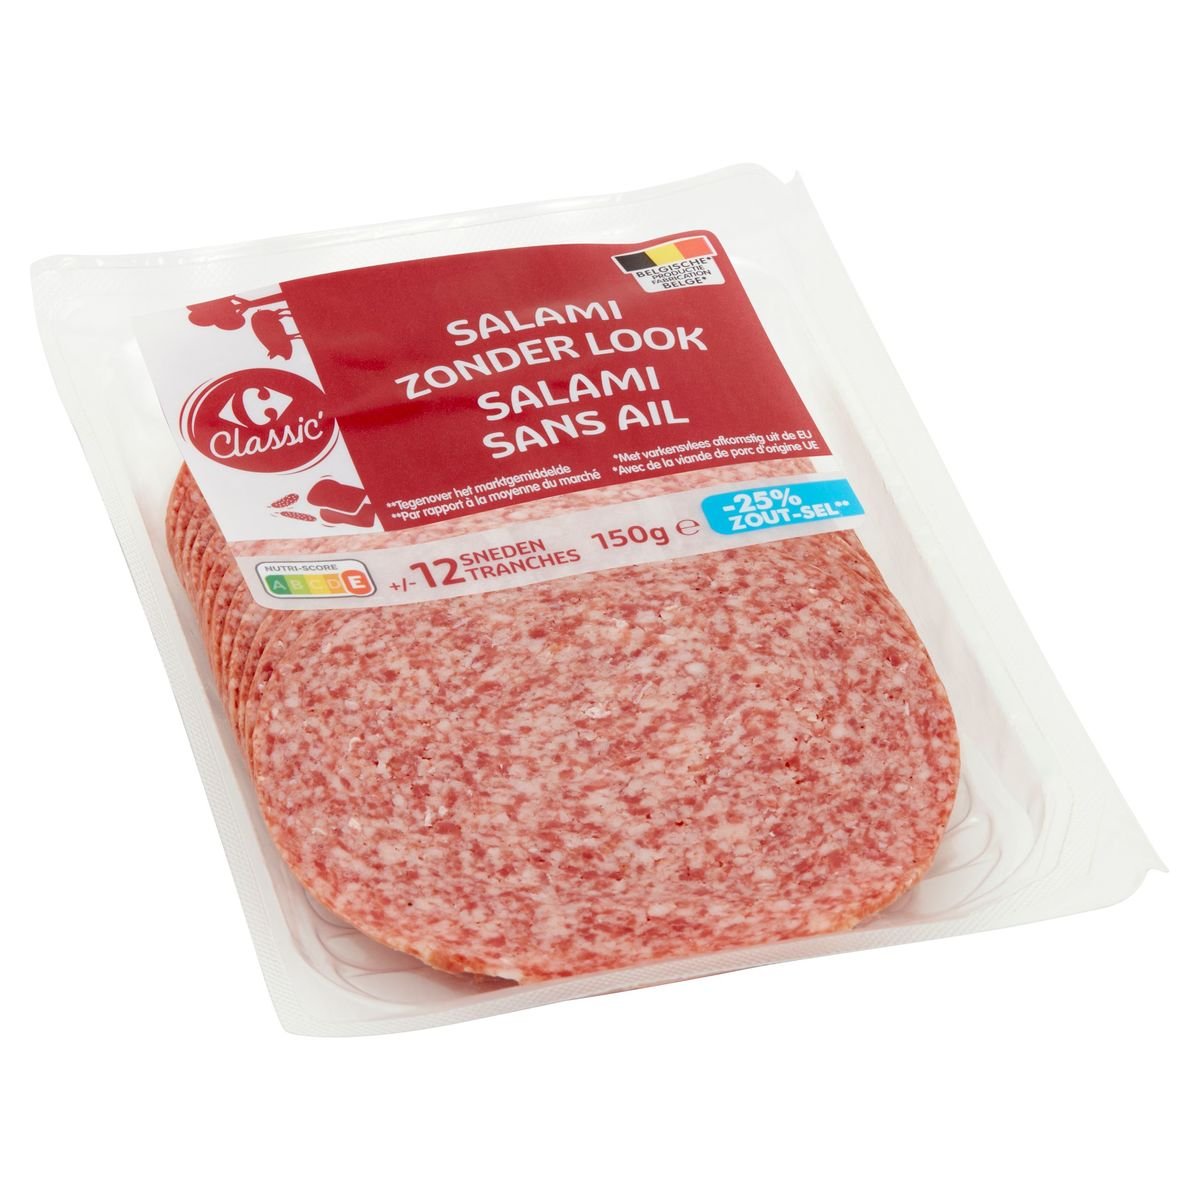 Carrefour Classic' Salami zonder Look 150 g